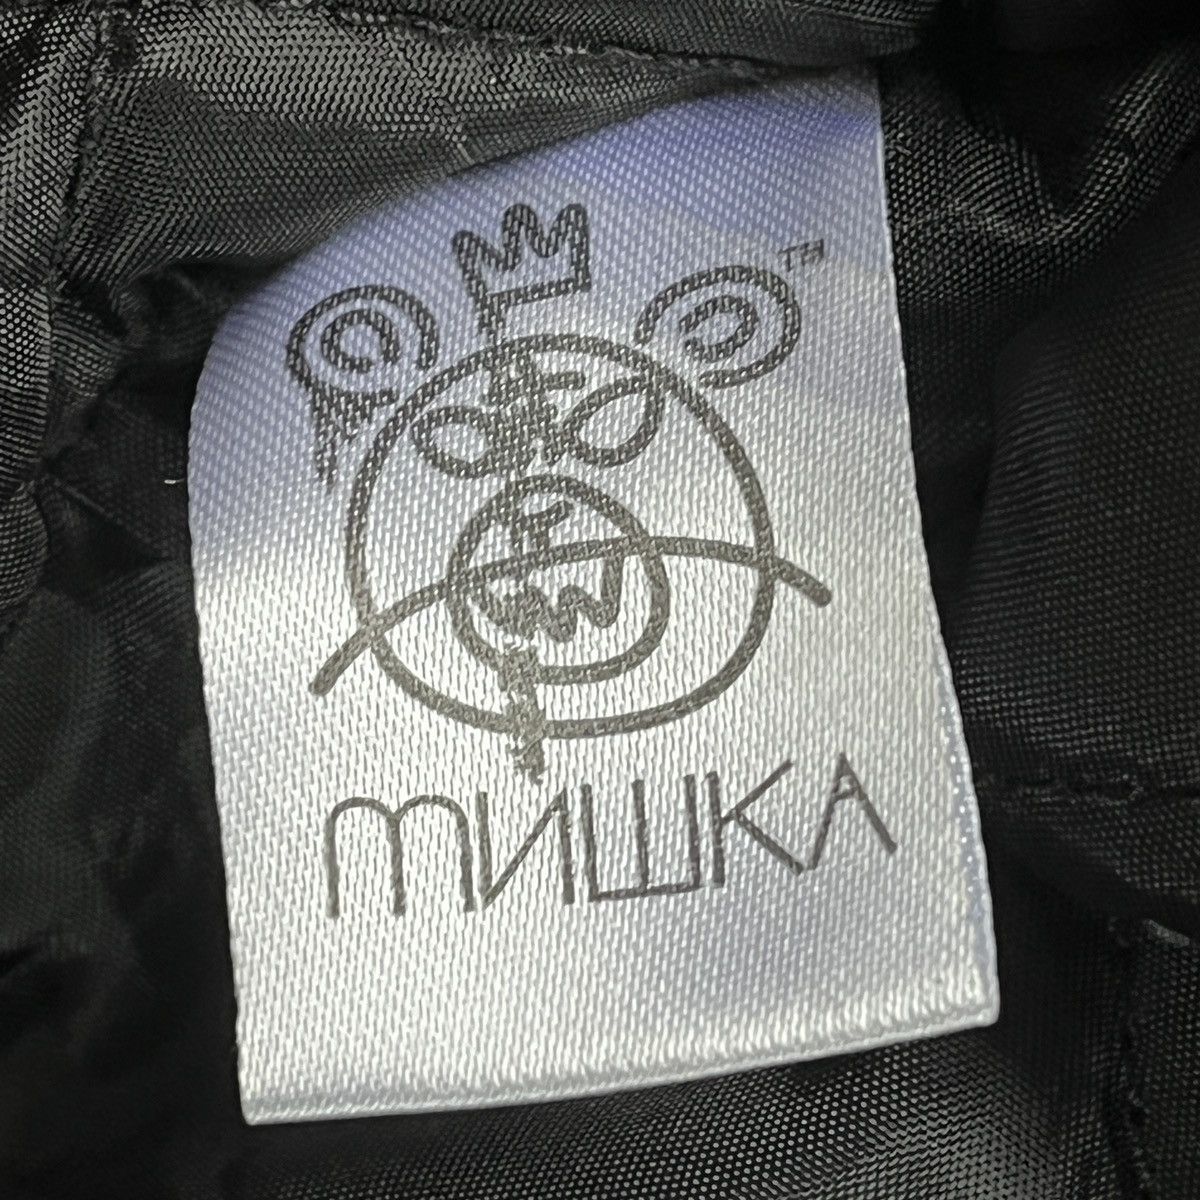 Very Rare - Vintage Mishka Varsity MNWKA Jacket Rare Big Eye Embroidery - 16